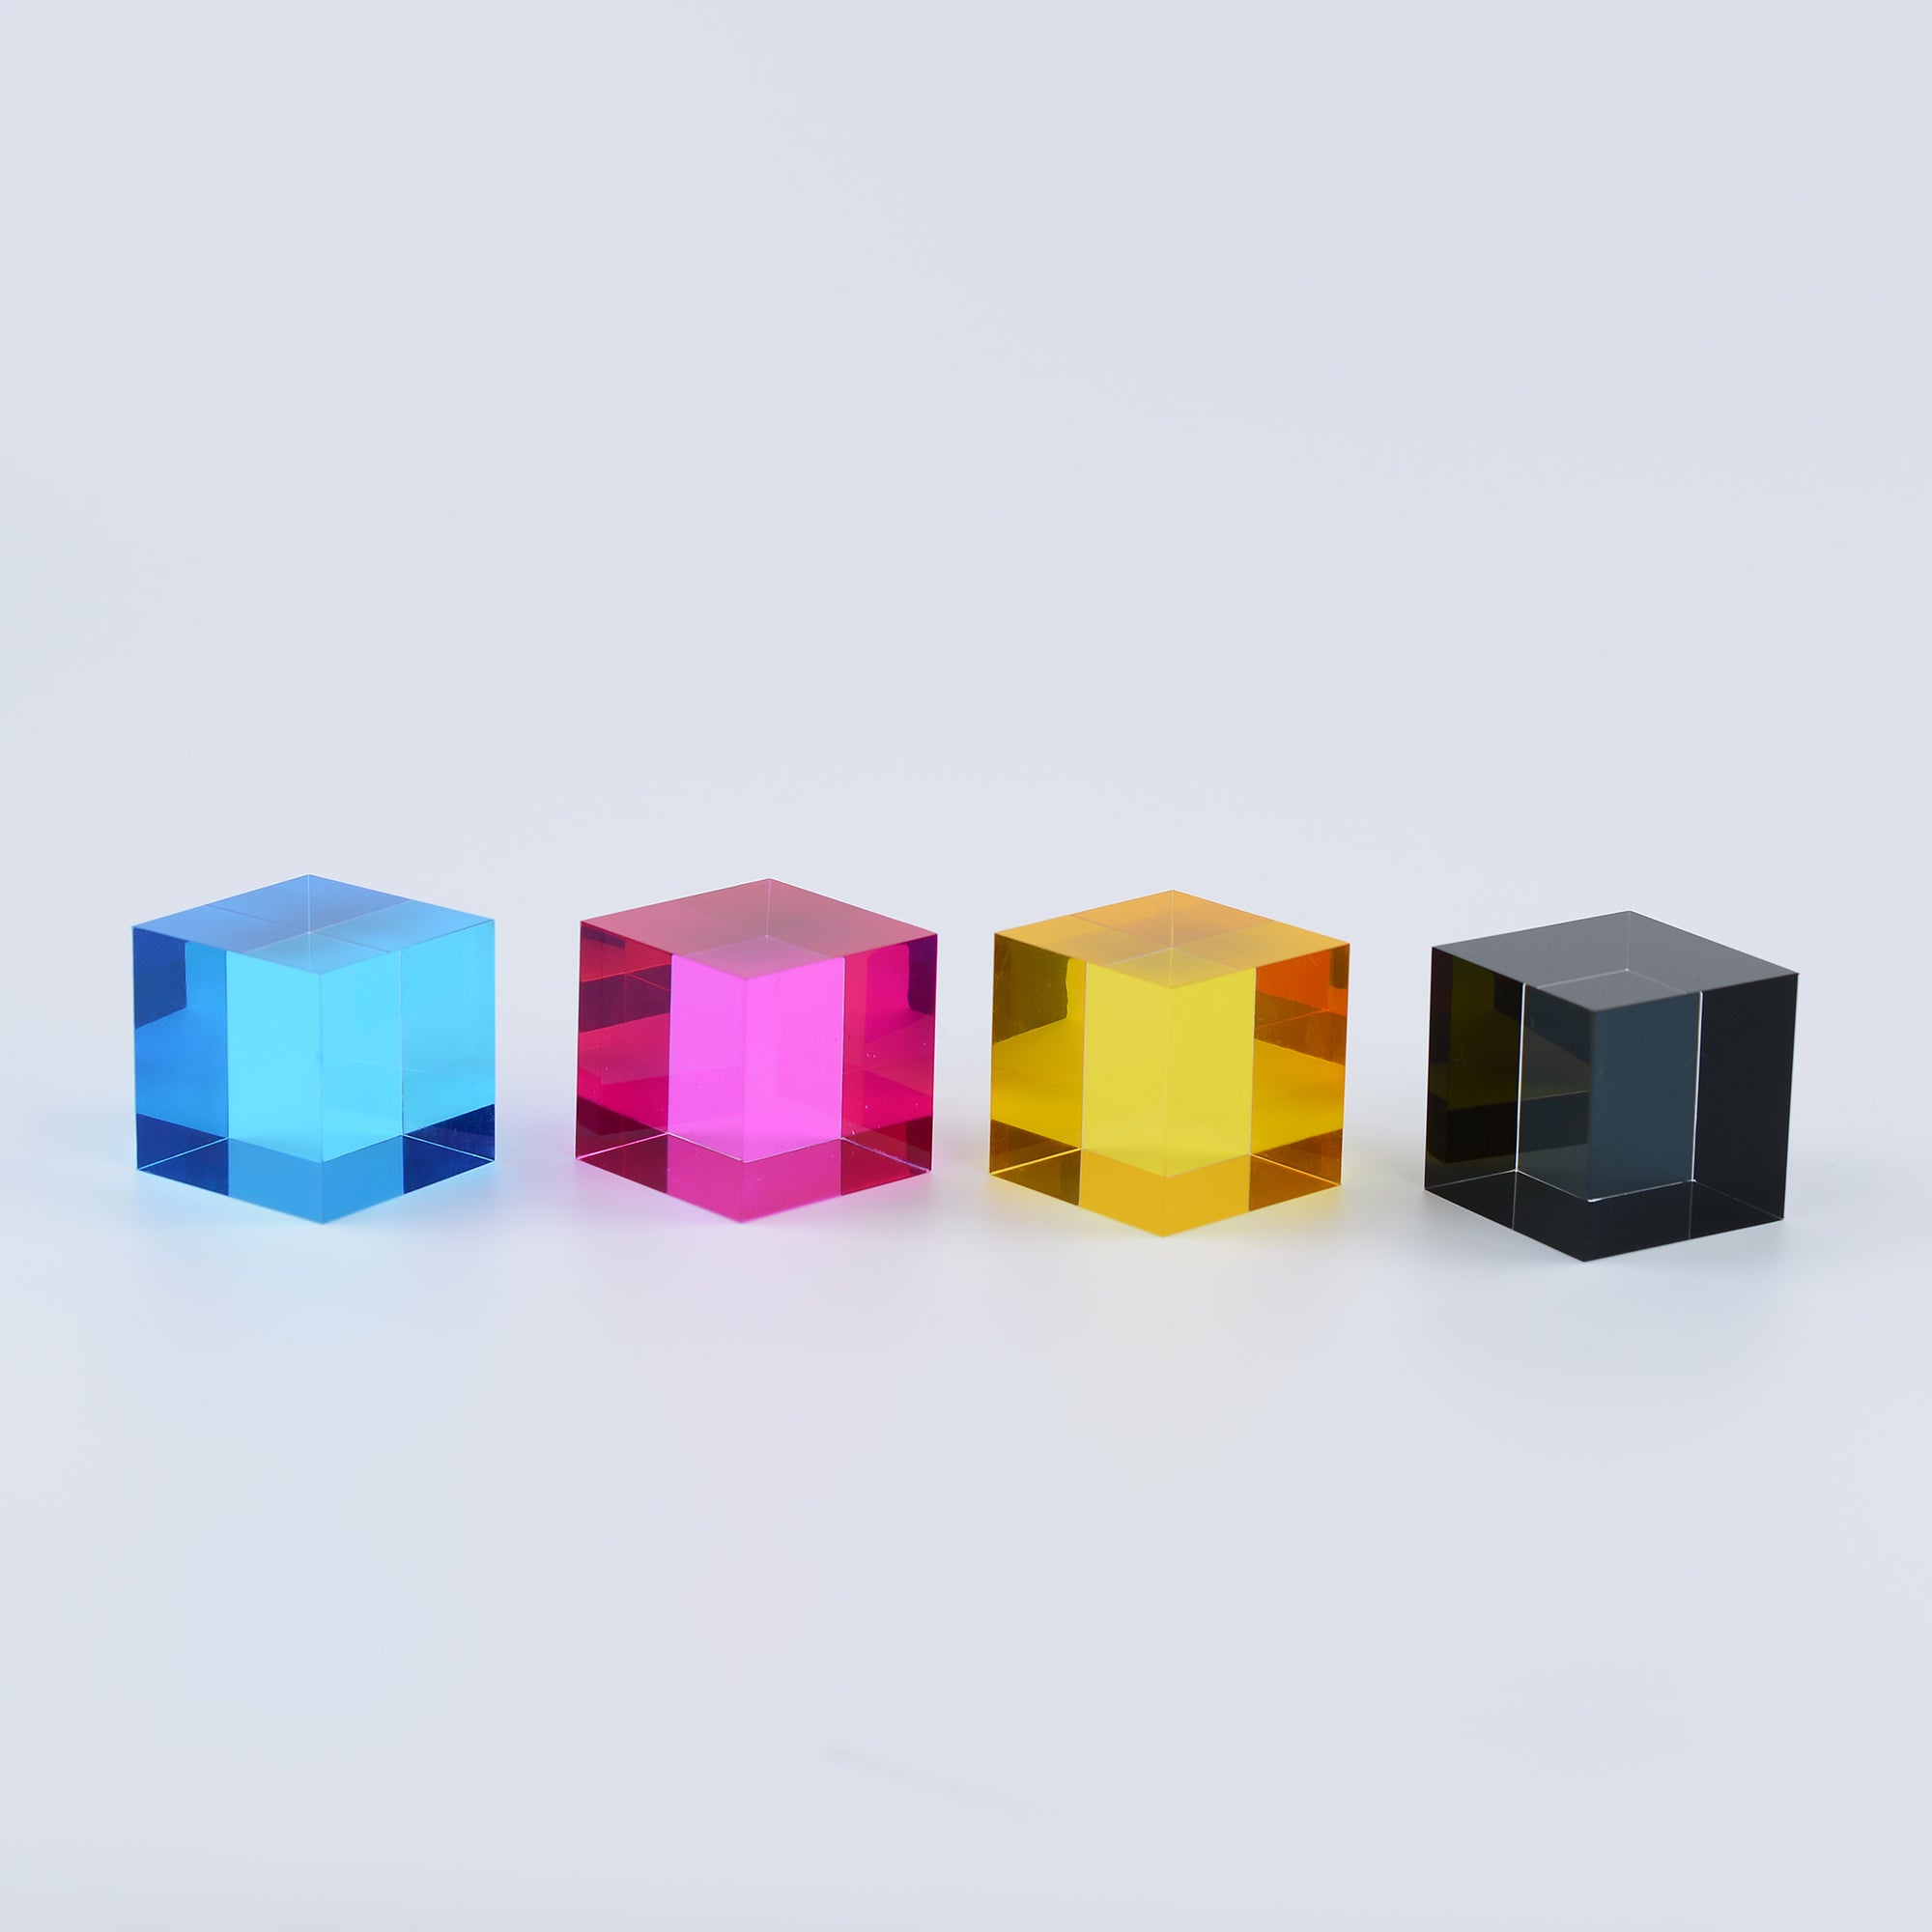 The K Cube